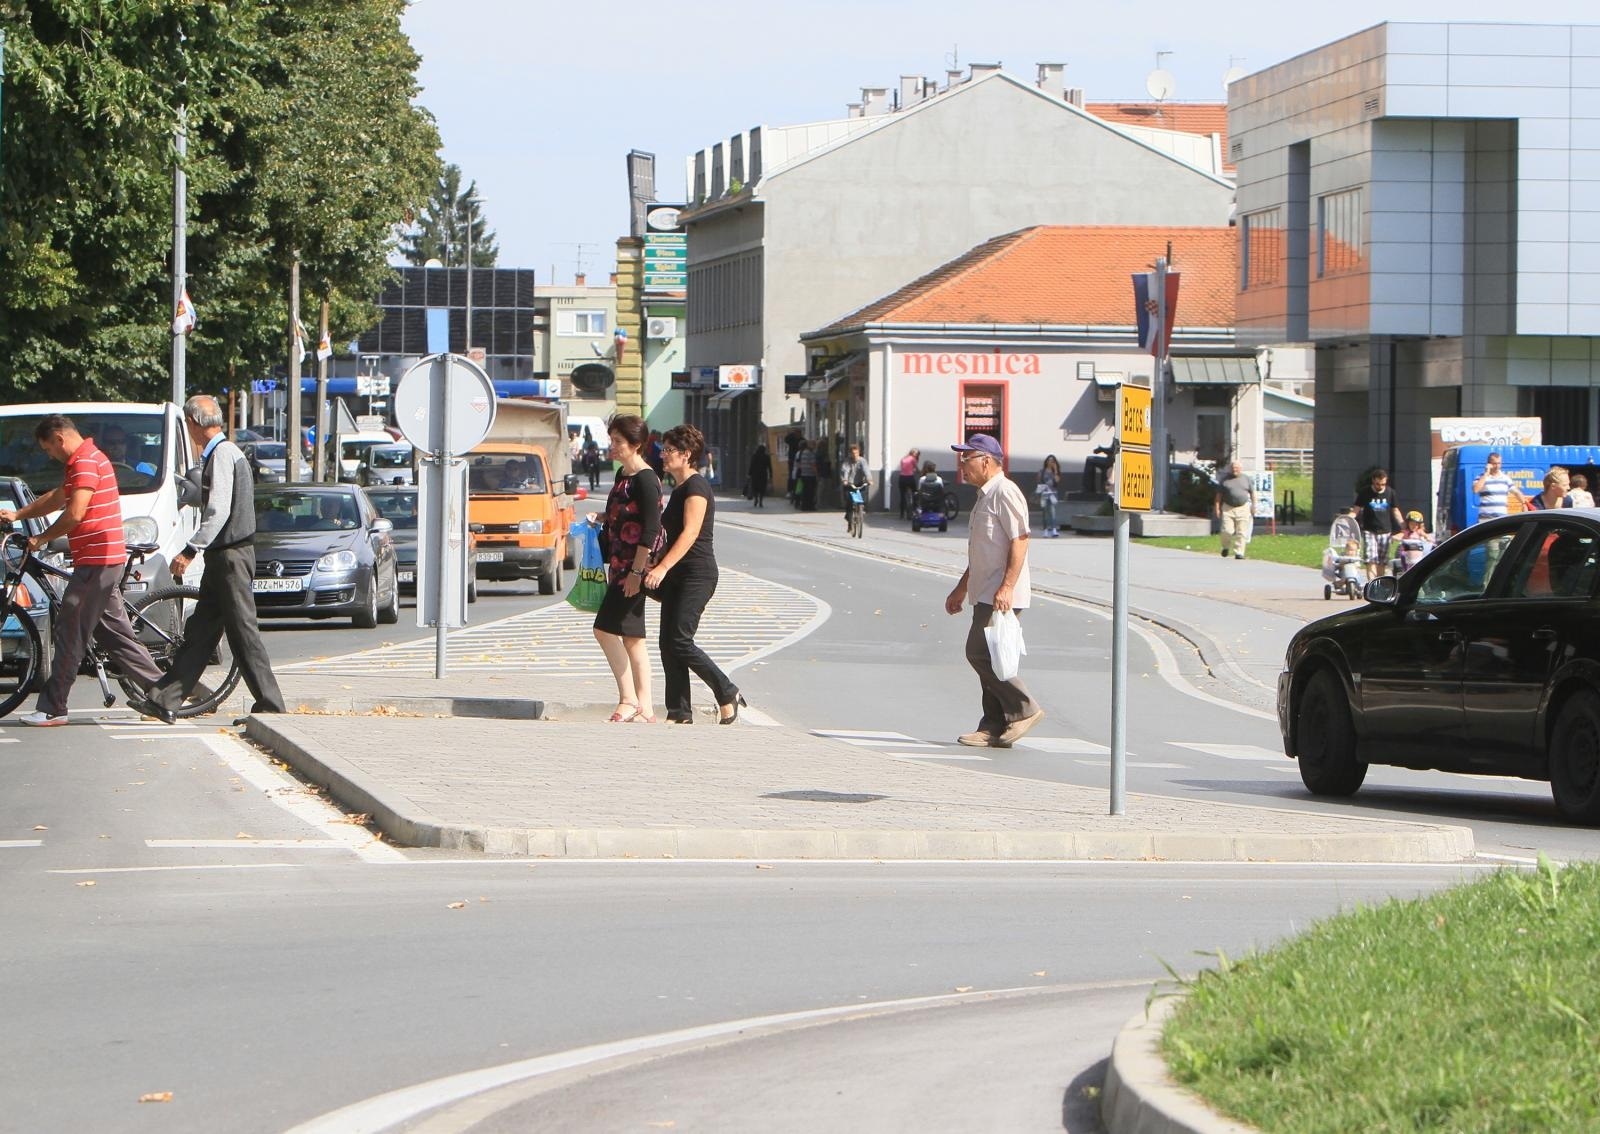 26.08.2014., Virovitica - Atmosfera na gradskim ulicama.
Photo: Marijan Susenj/PIXSELL